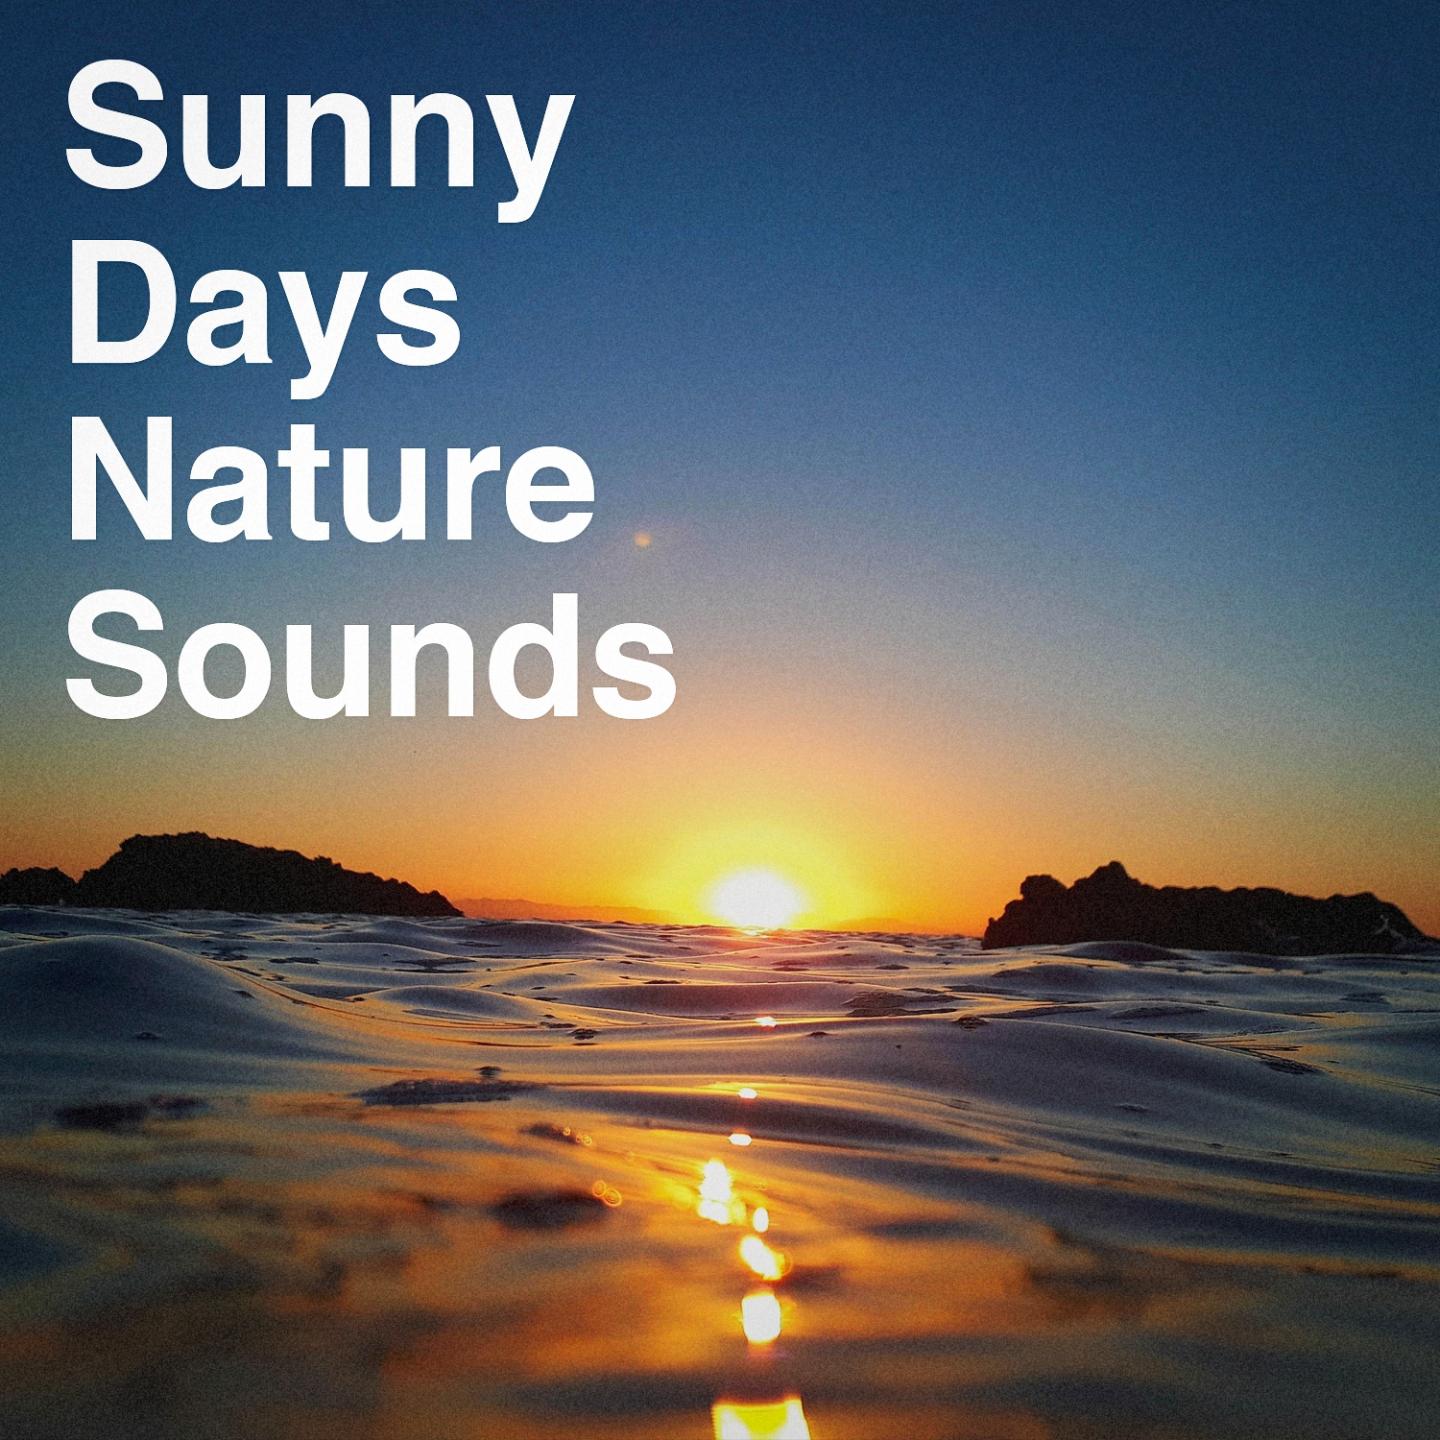 Sunny Days Nature Sounds